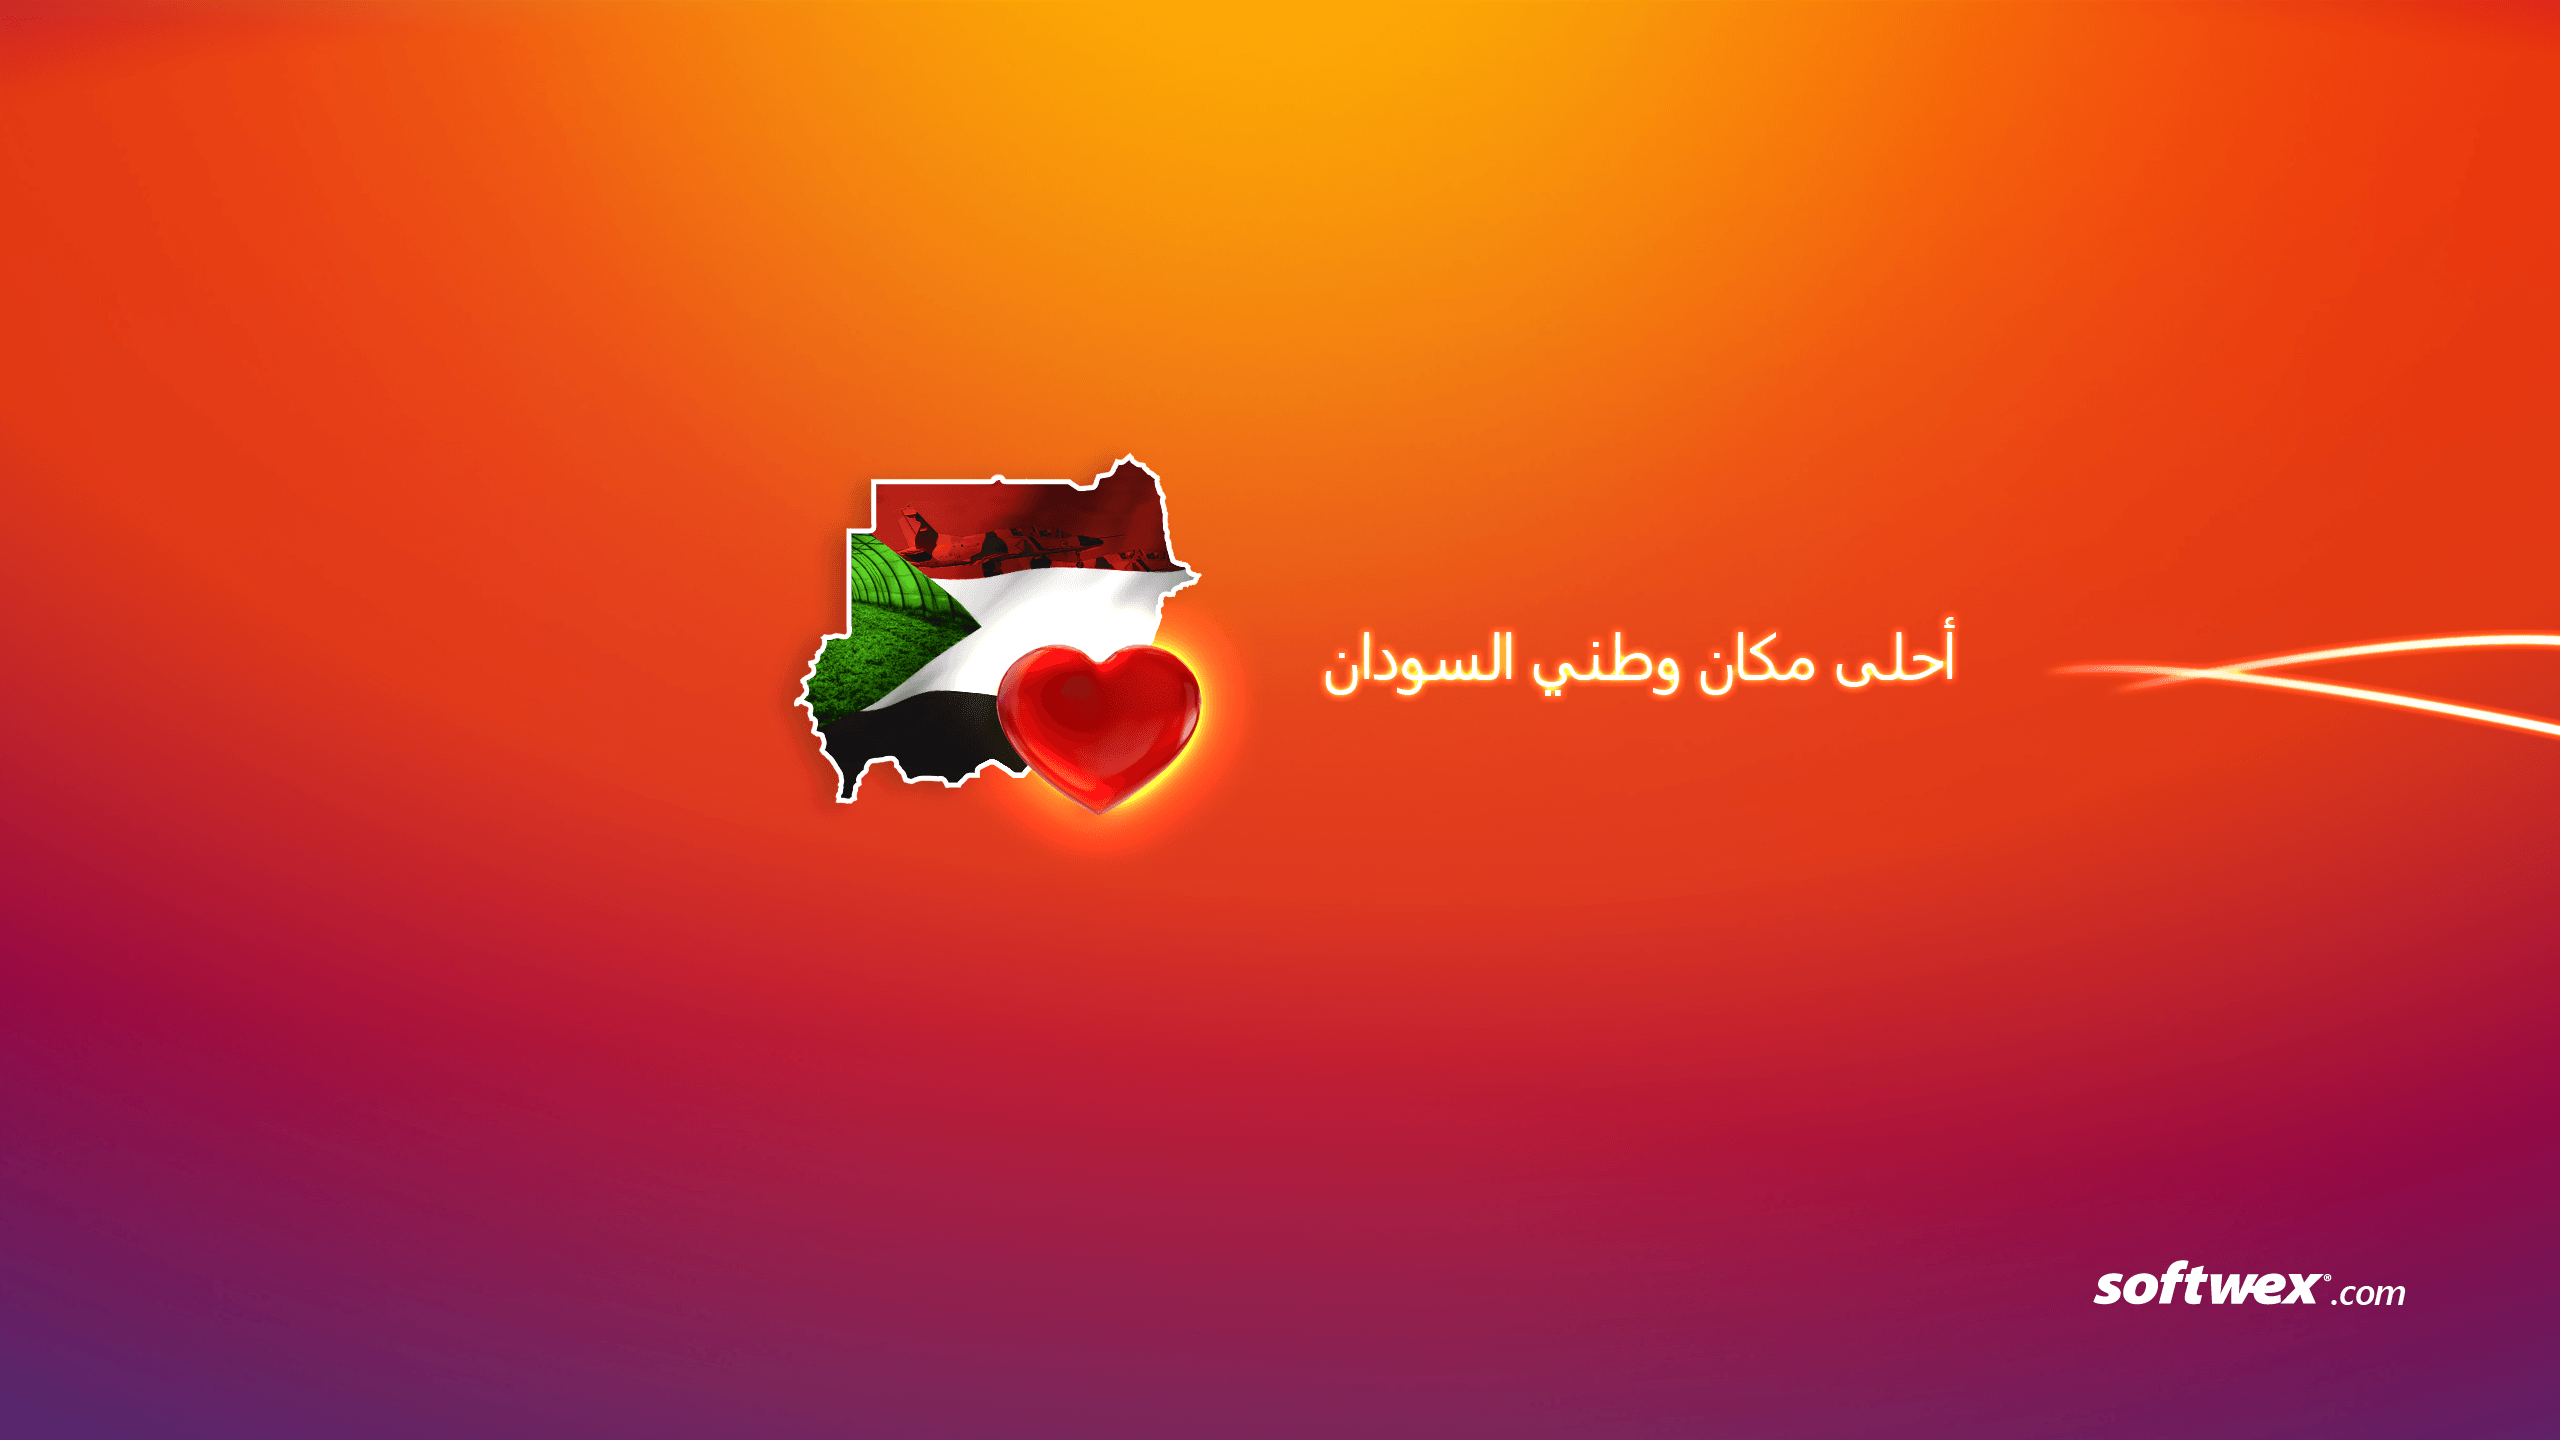 The Softwex Blog Sudan wallpaper